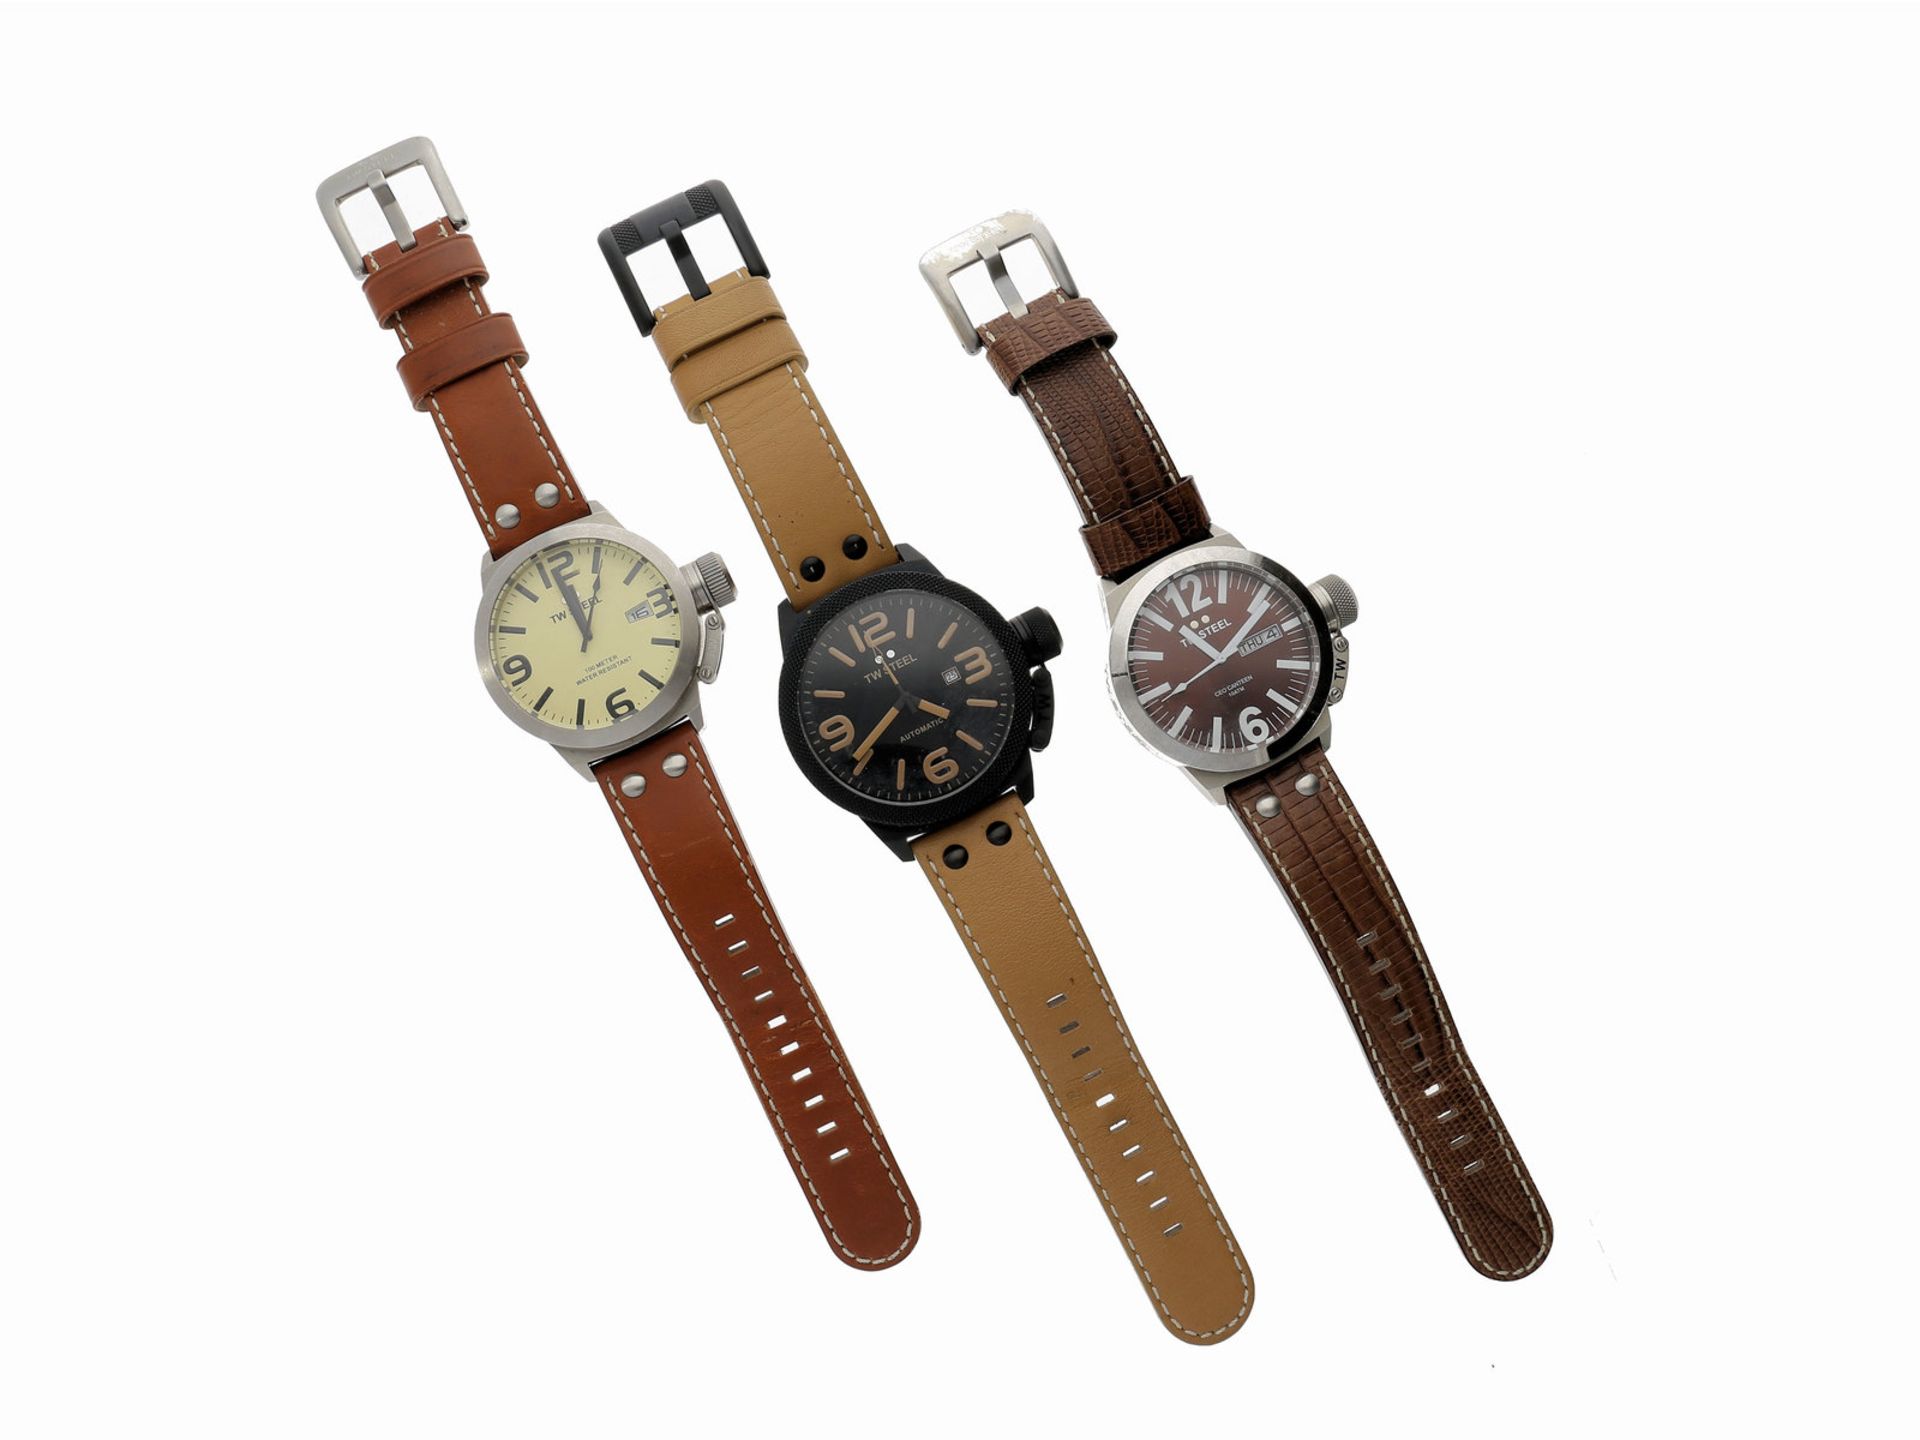 Armbanduhr: Konvolut von 3 großen Herrenarmbanduhren, Sportmodelle "TW Steel" im Taucher-Design2x